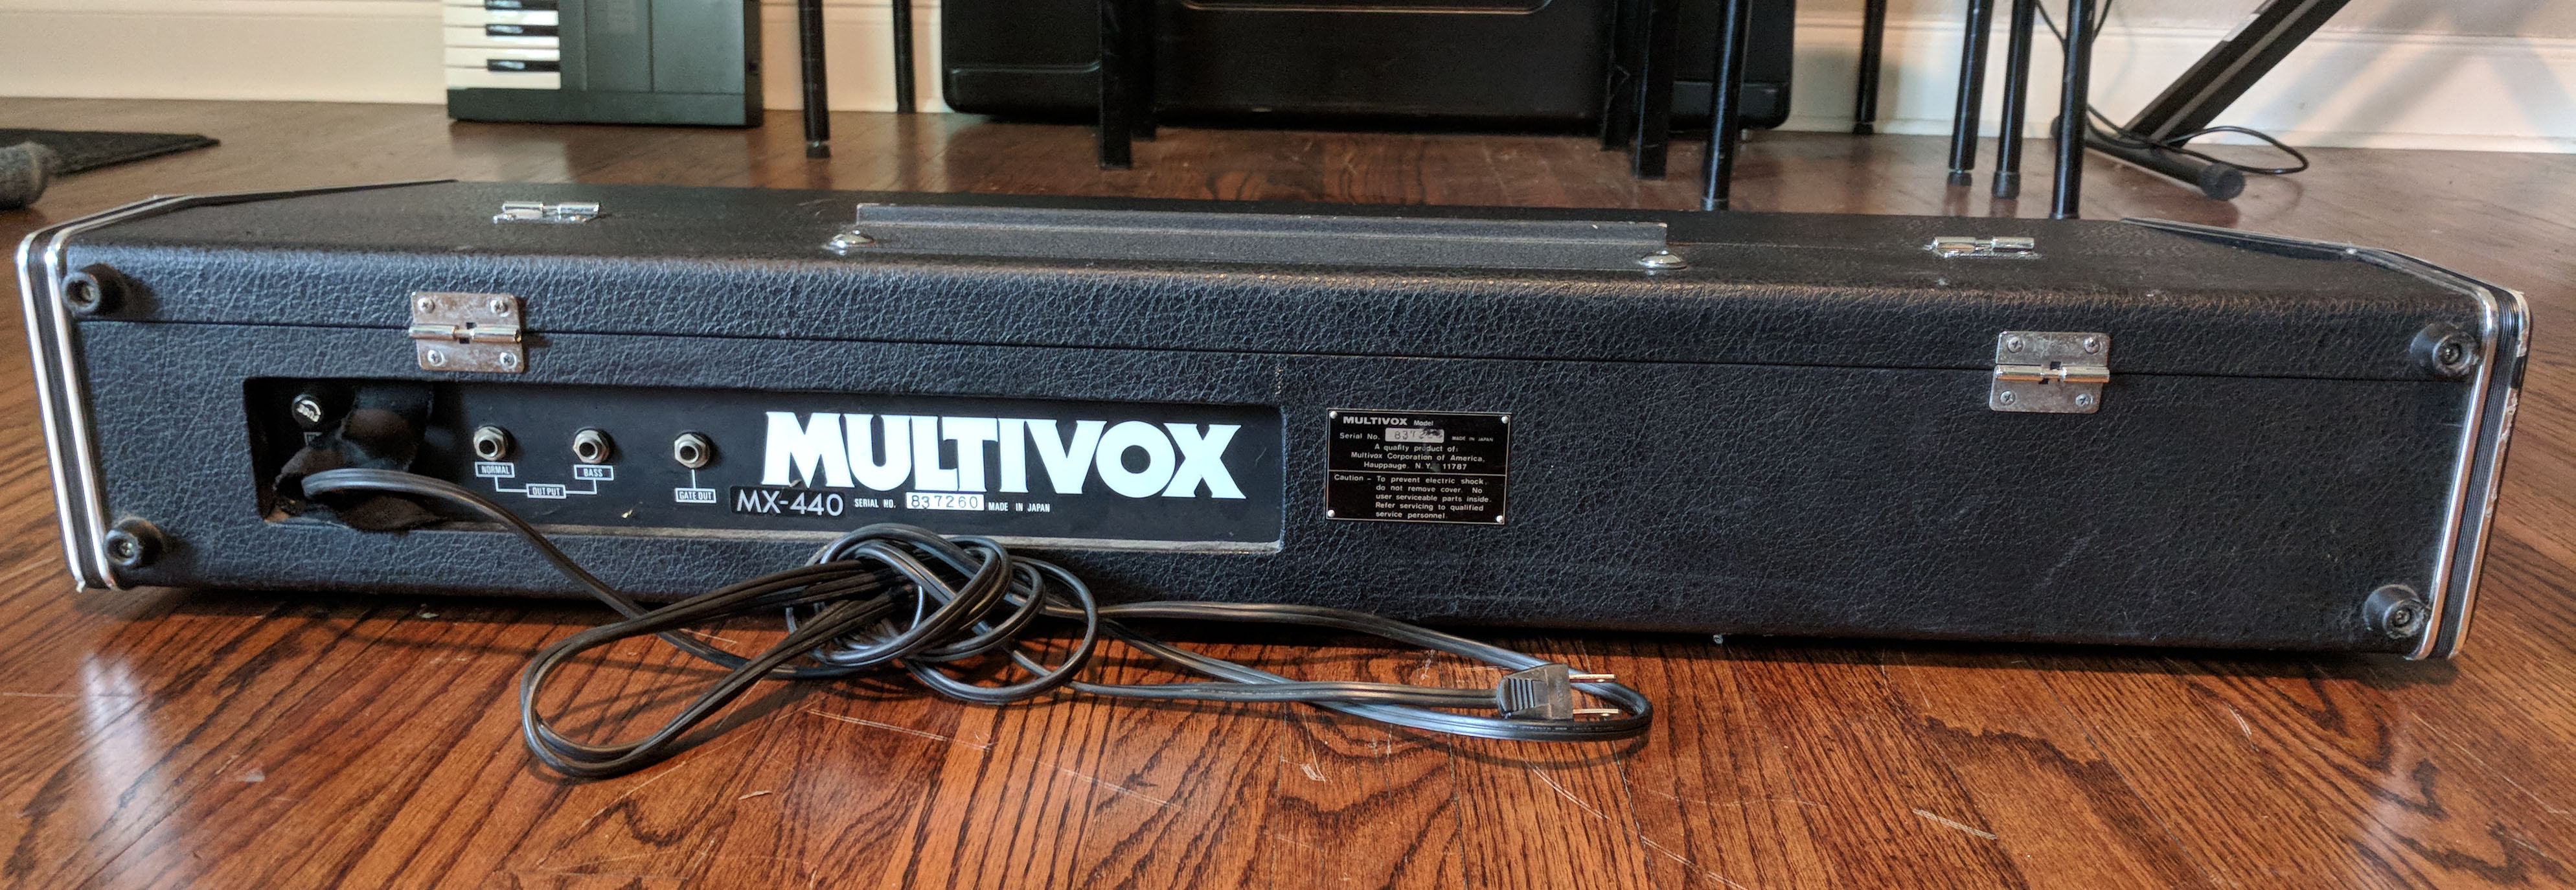 Multivox MX-440